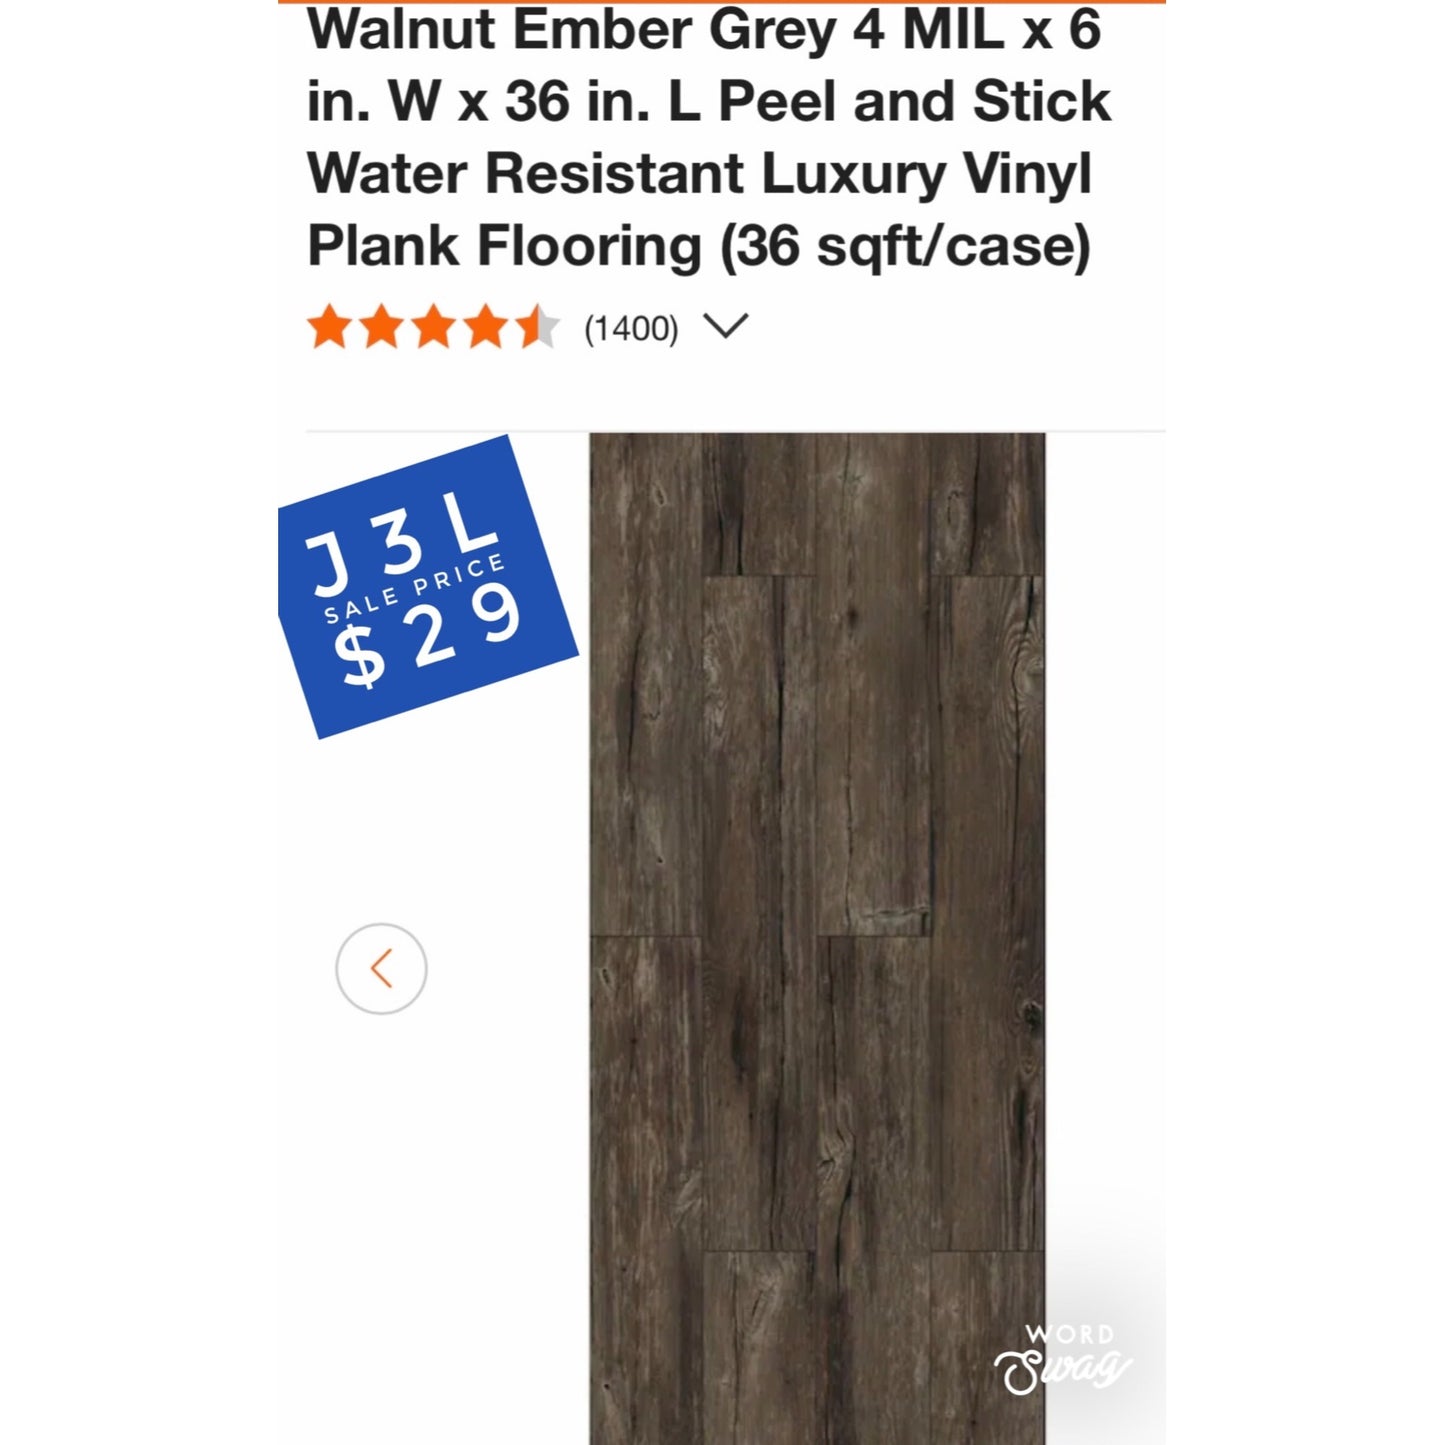 Walnut Ember Grey 4 MIL x 6 in. W x 36 in. L Peel and Stick Water Resistant Luxury Vinyl Plank Flooring (36 sqft/case)